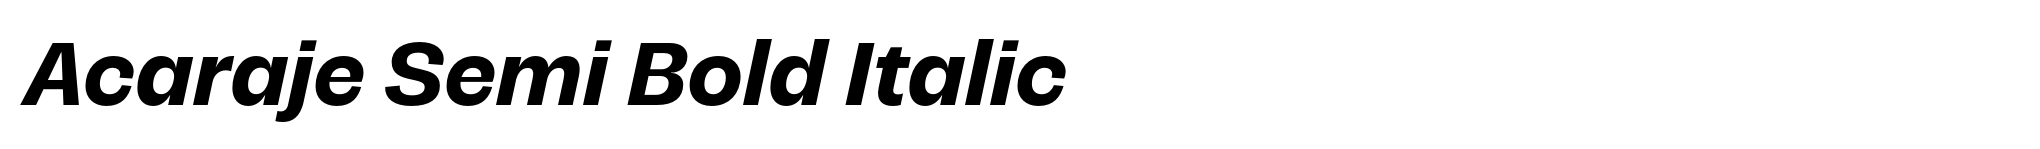 Acaraje Semi Bold Italic image